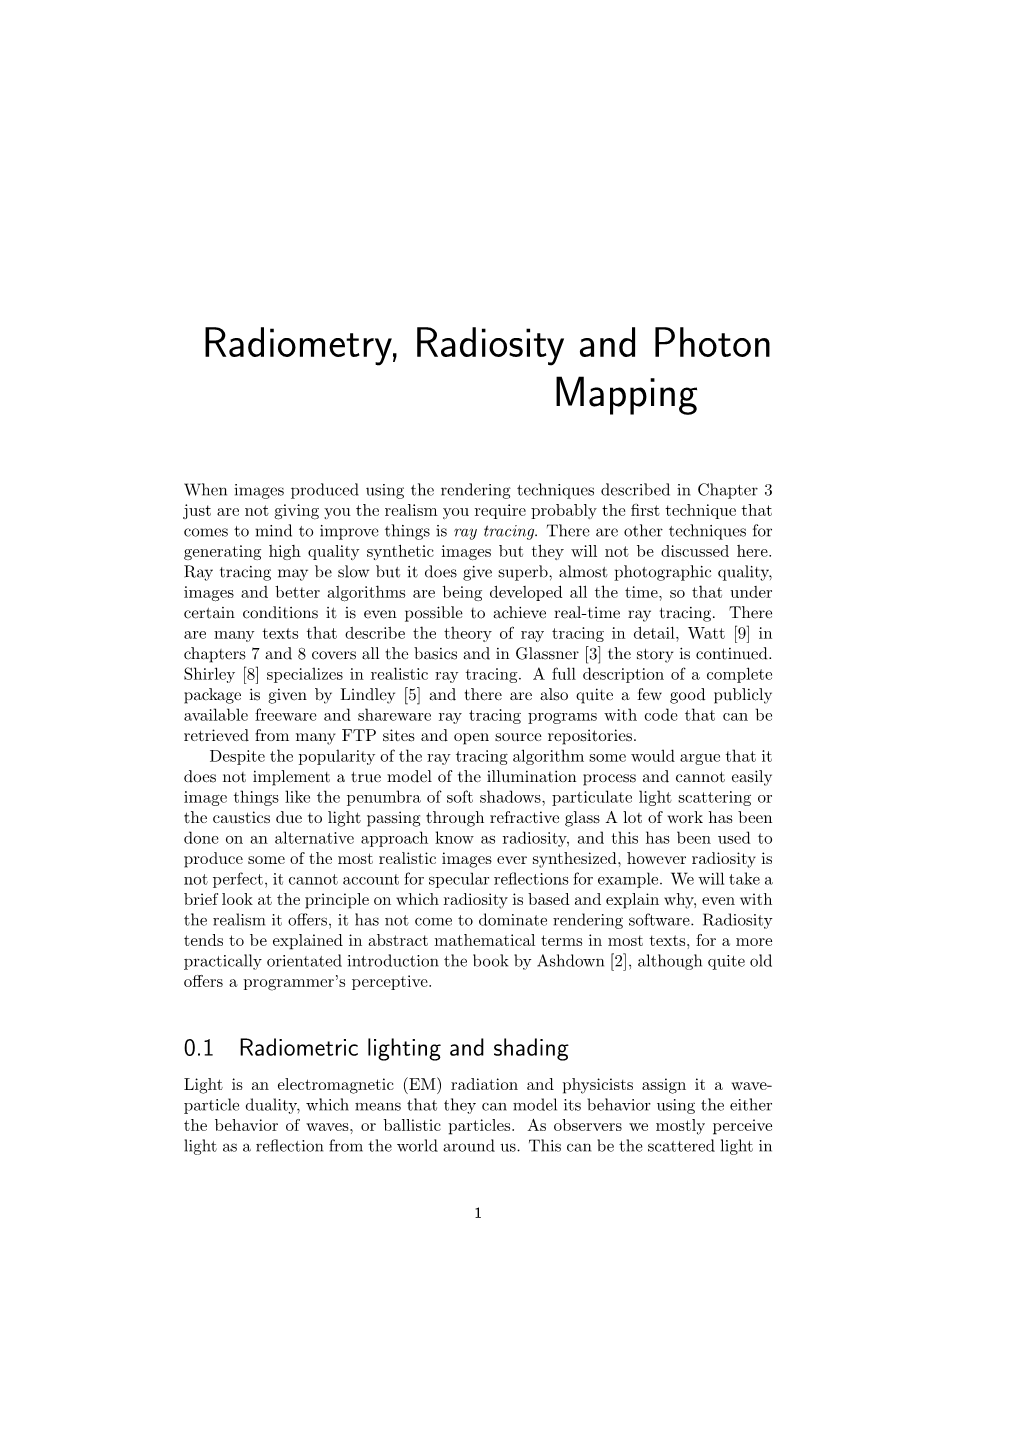 Radiometry, Radiosity and Photon Mapping